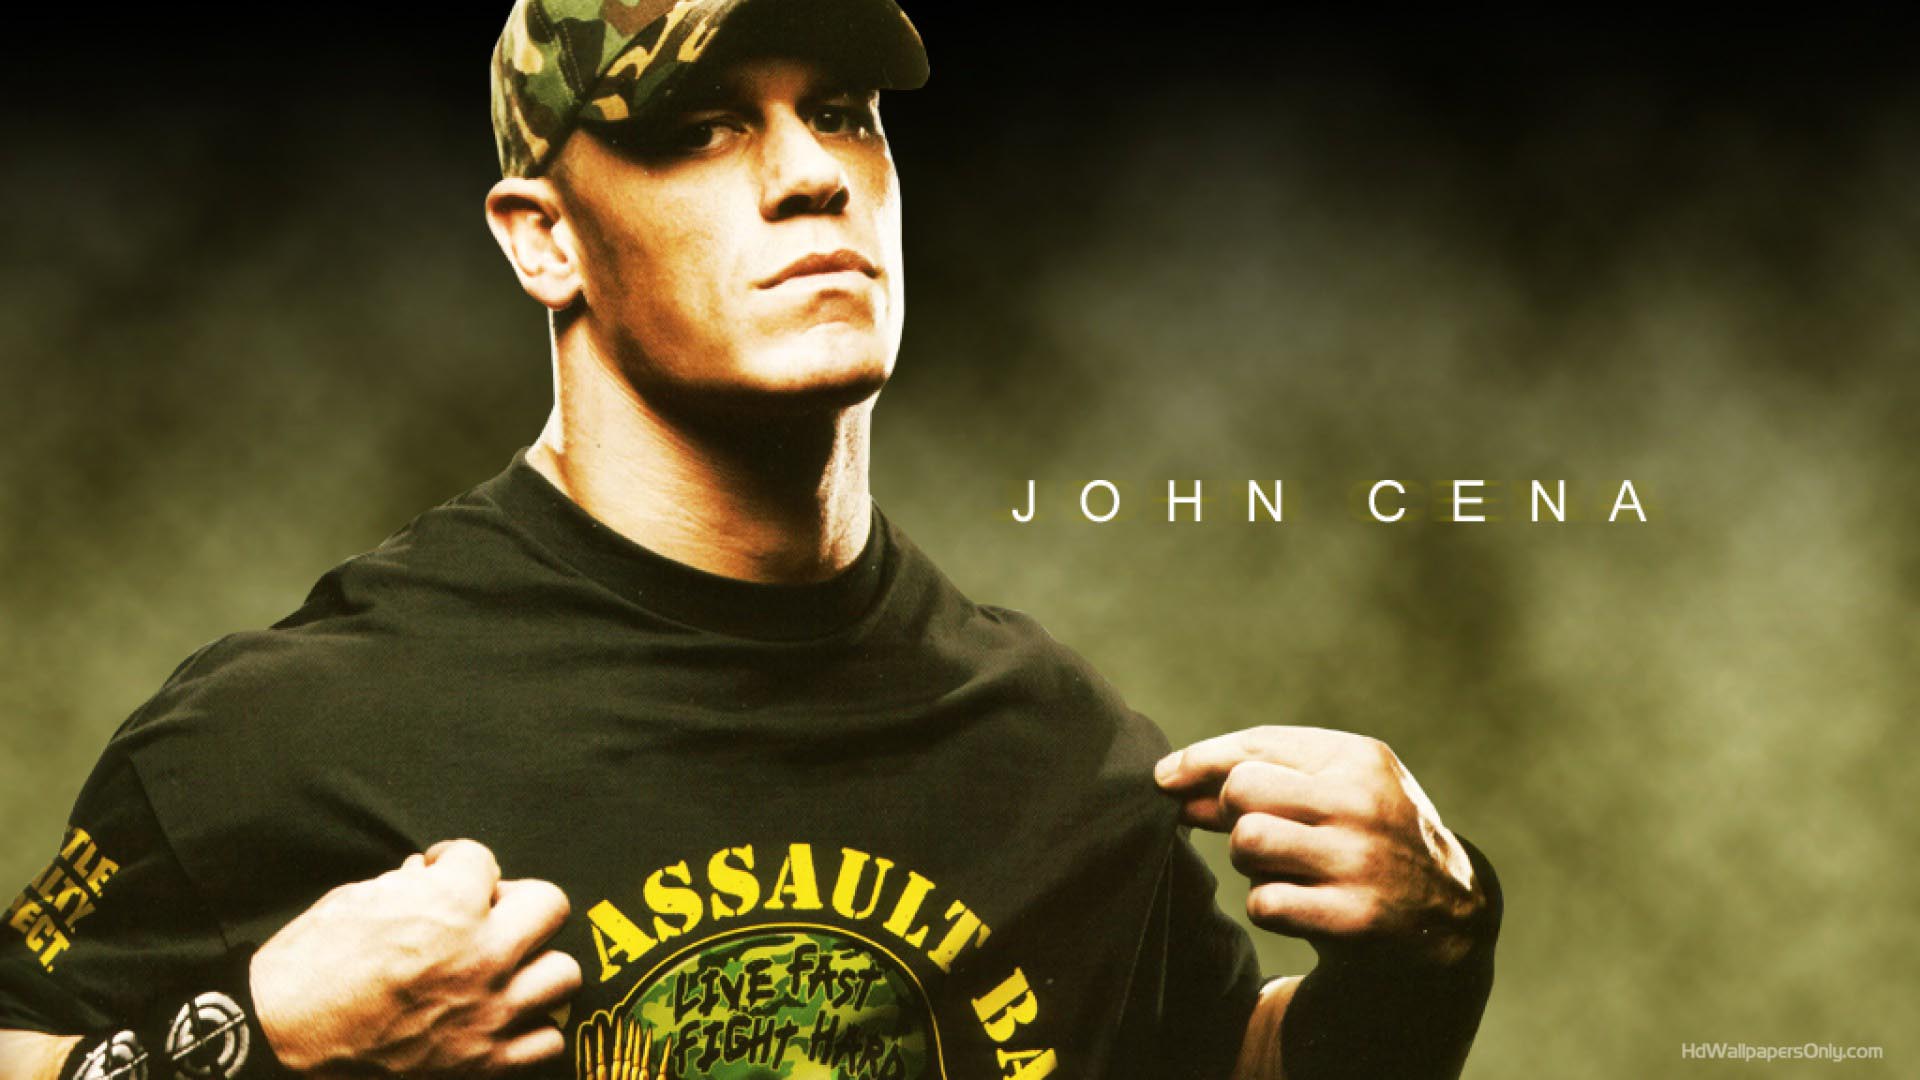 John Cena Wallpaper HD OnlyHD Only